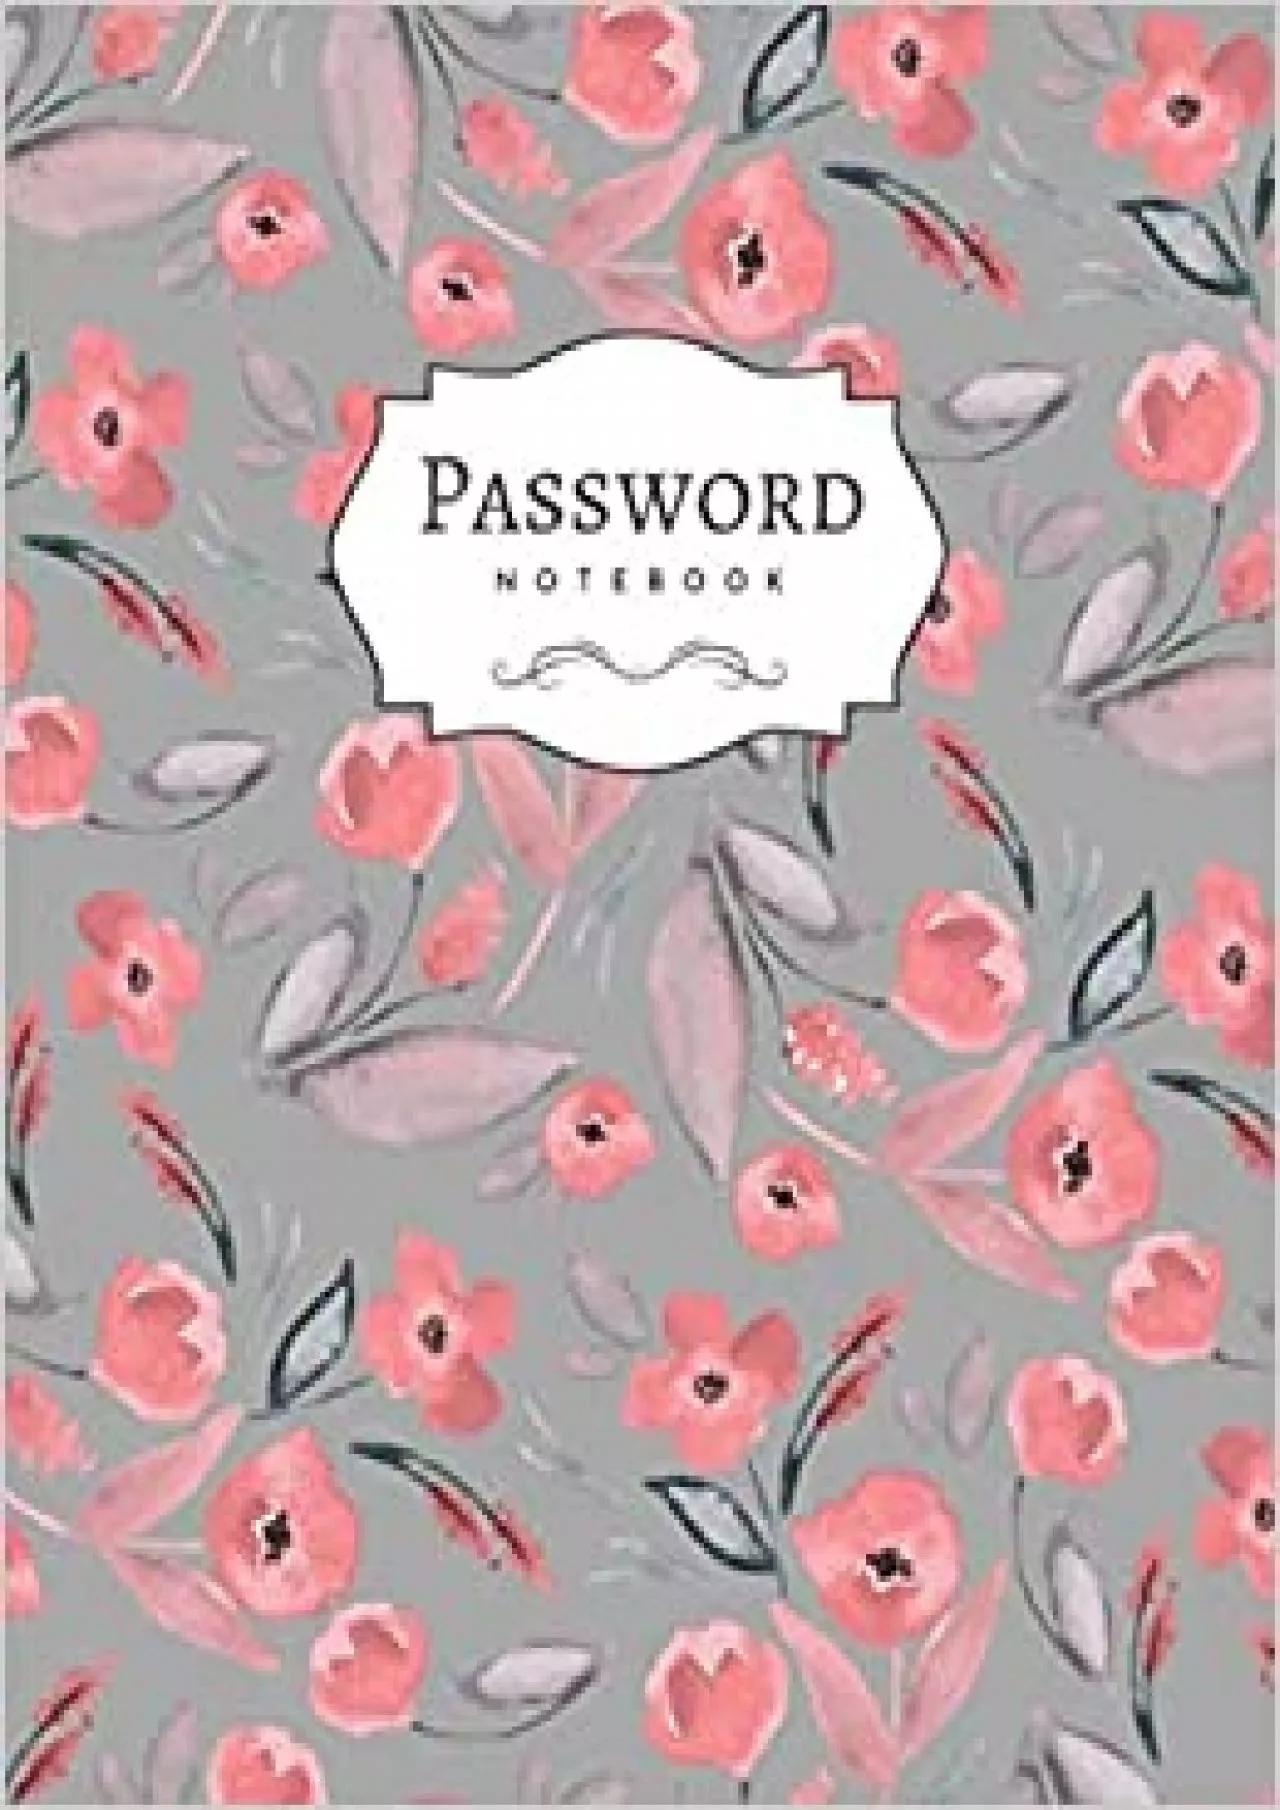 (BOOK)-Password Notebook: 8x10 Login Journal Organizer Big with A-Z Alphabetical Tabs